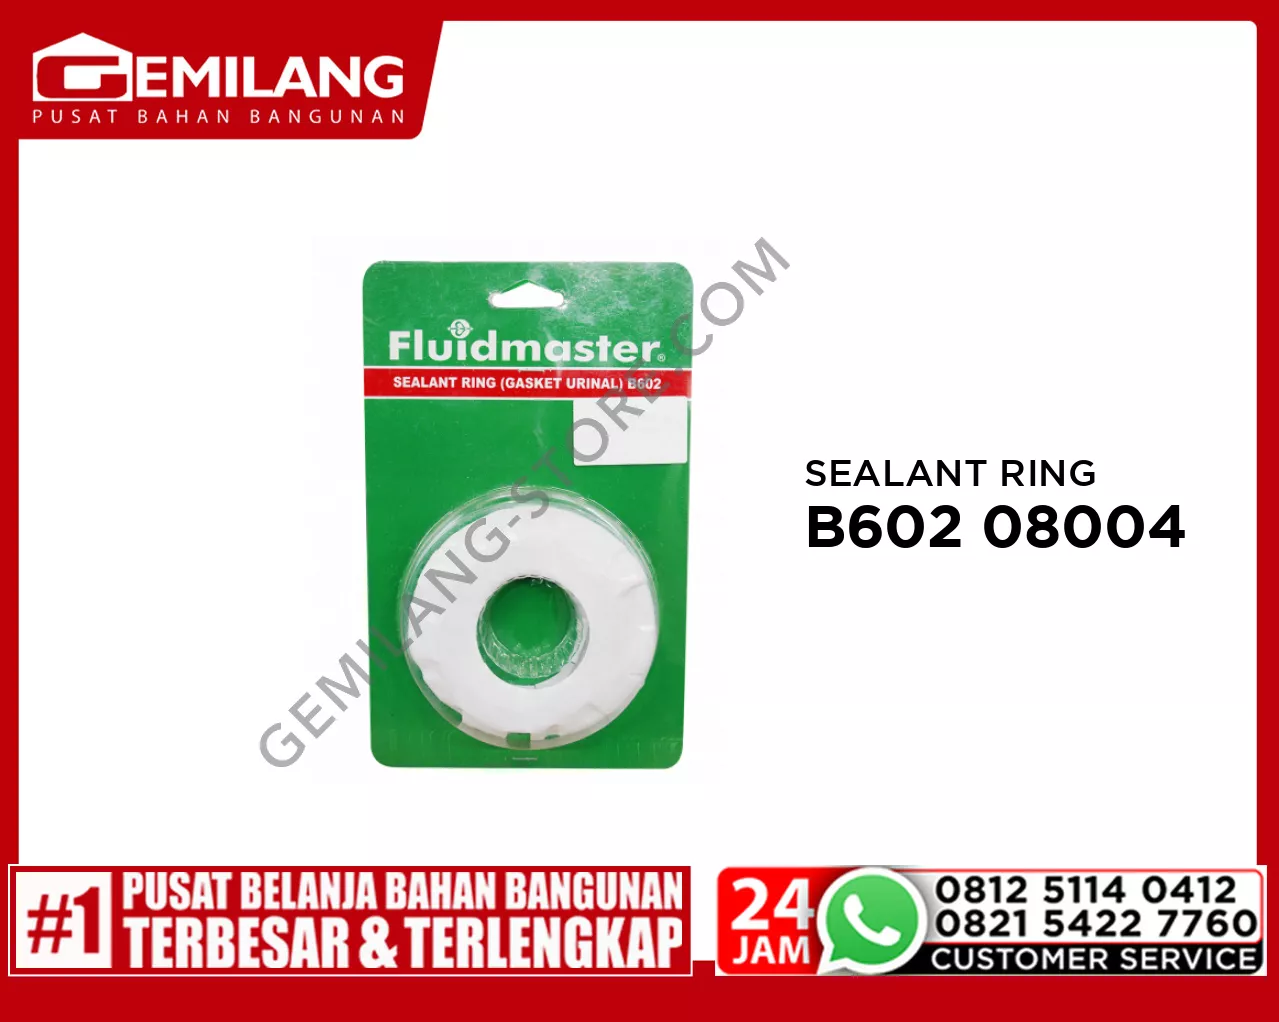 FLUID MASTER SEALANT RING B602 08004